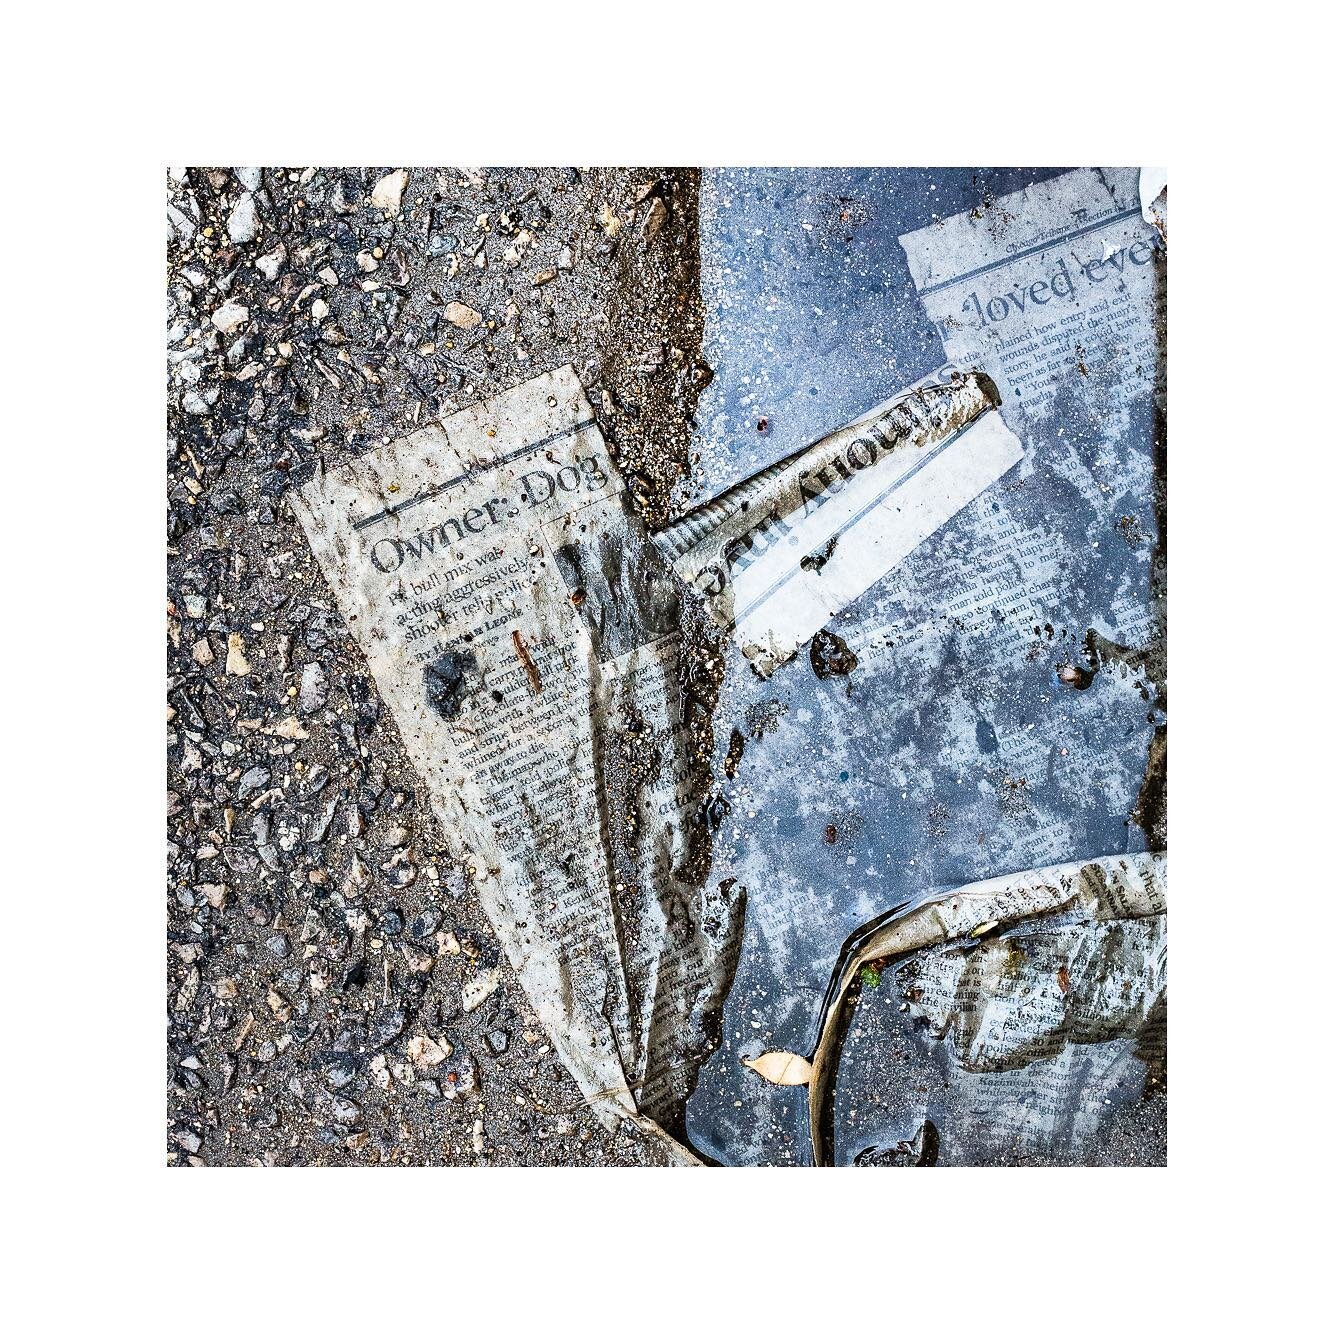 Soggy newspaper sidewalk portraits.
Owner: Dog - Chicago, May 2016
Asses Saved - New York, March 2023

:
:
:
:
:

#wetnewspaper #soggynewspaper #puddle #sidewalk #headlines #allthenewsthatsfittoprint #cement #asphalt #newsprint #textbasedart #newyork